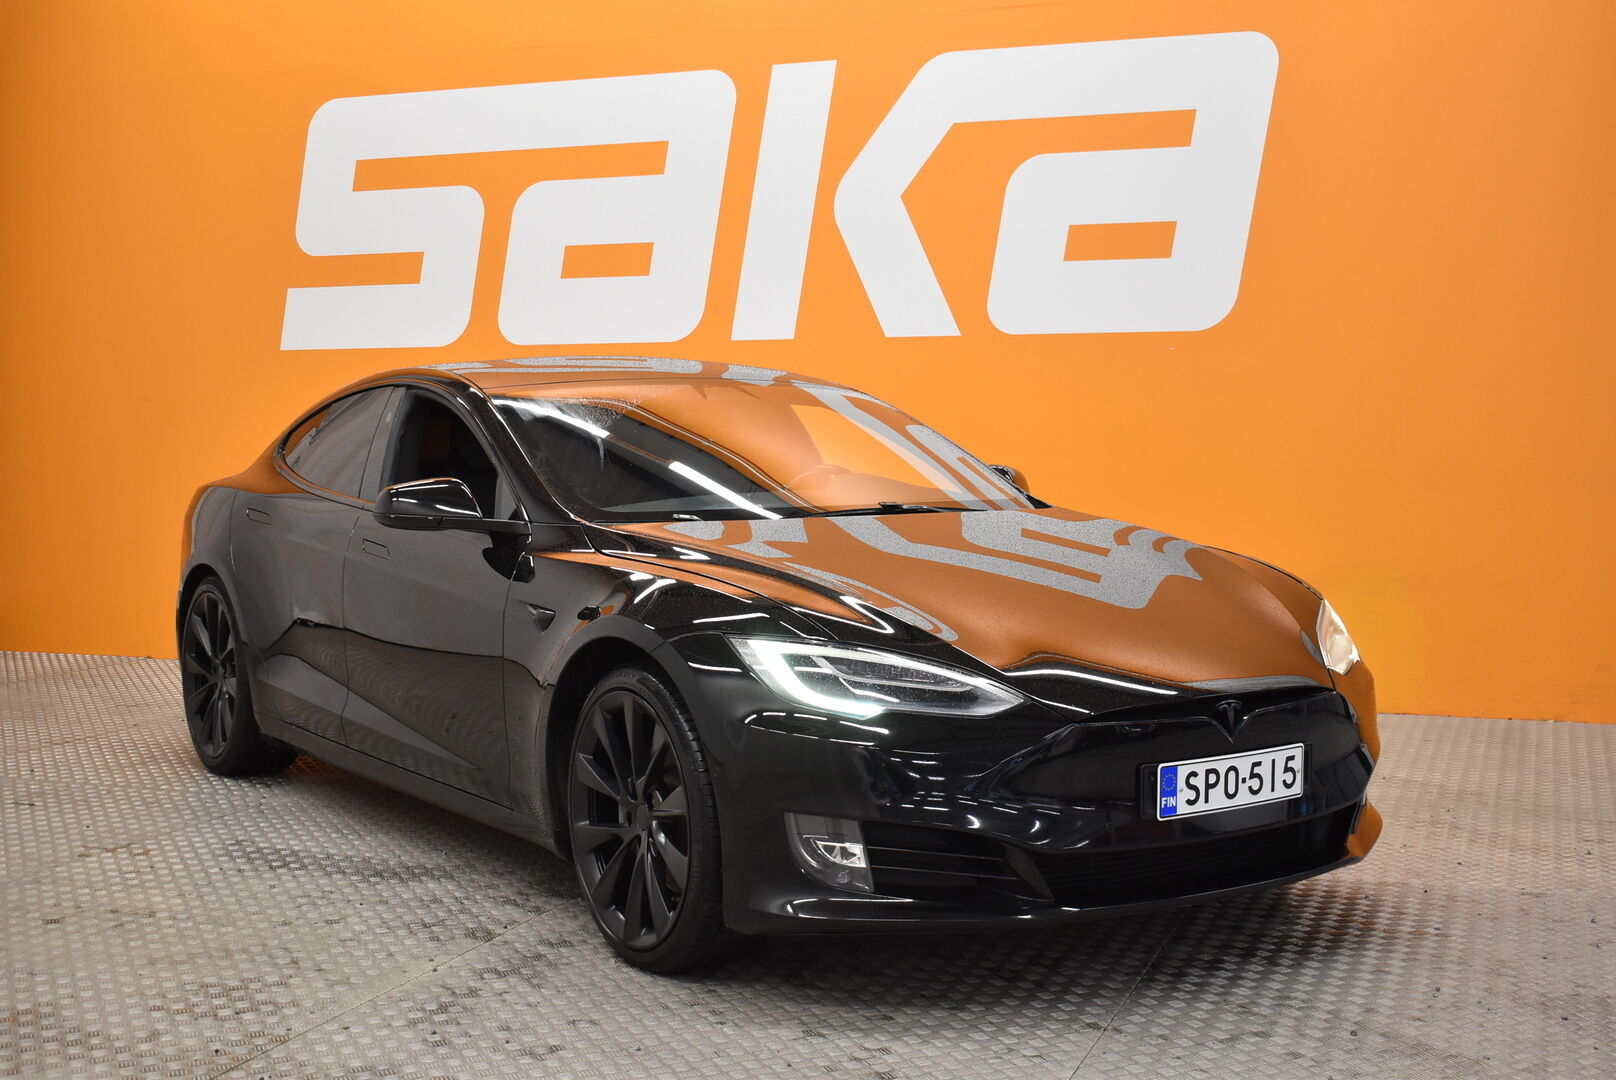 Musta Sedan, Tesla Model S – SPO-515